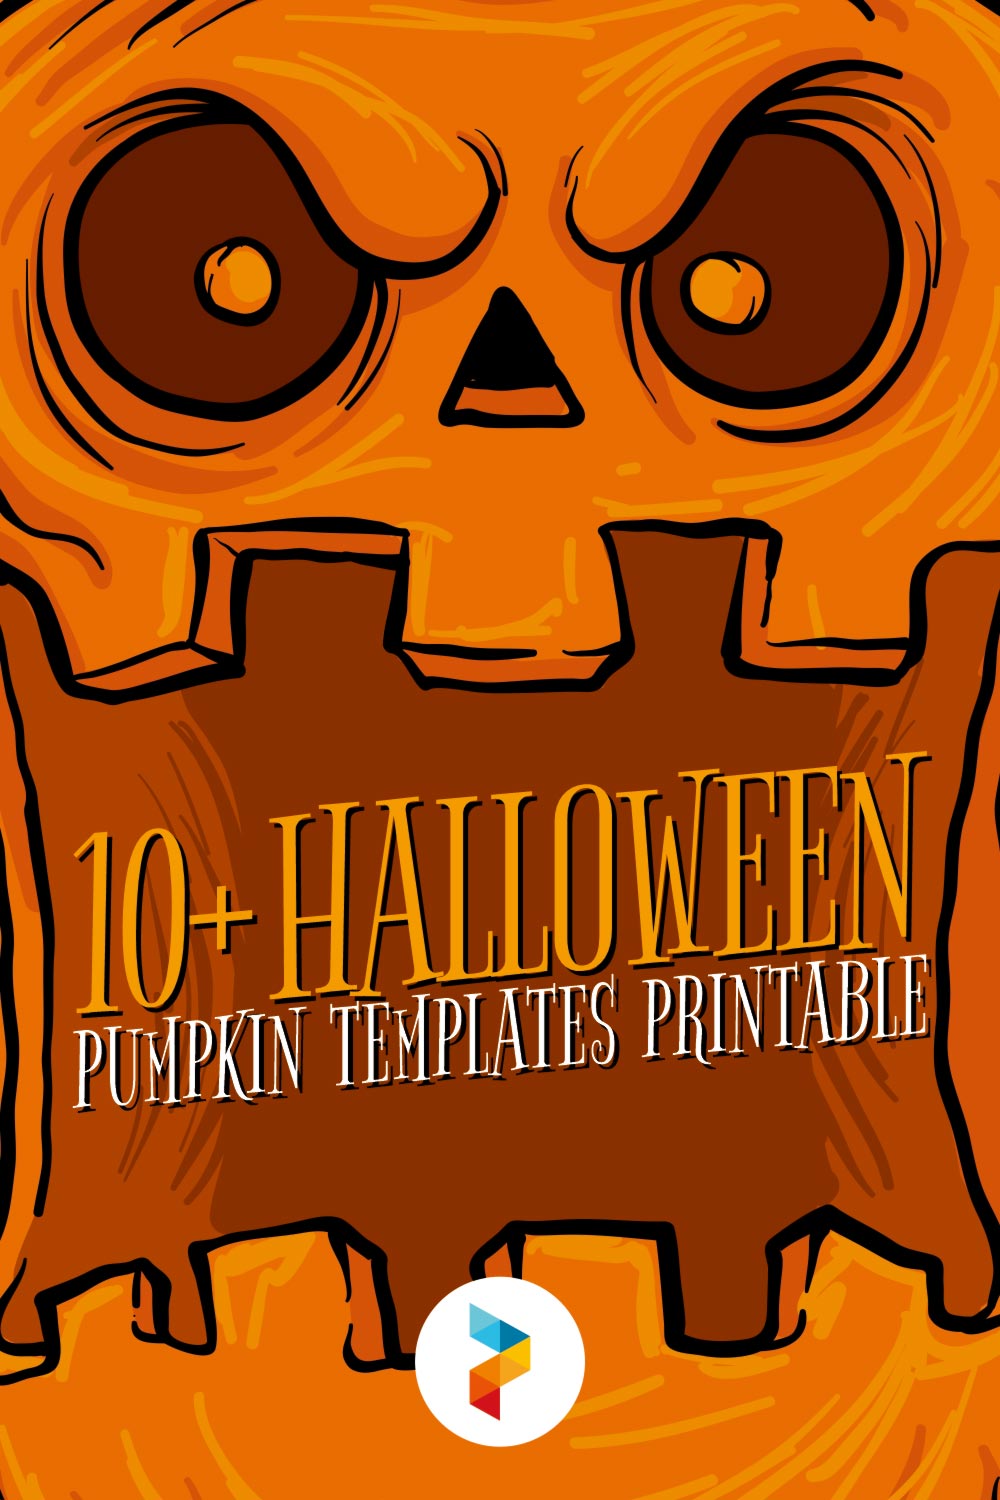 Halloween Pumpkin Templates Printable